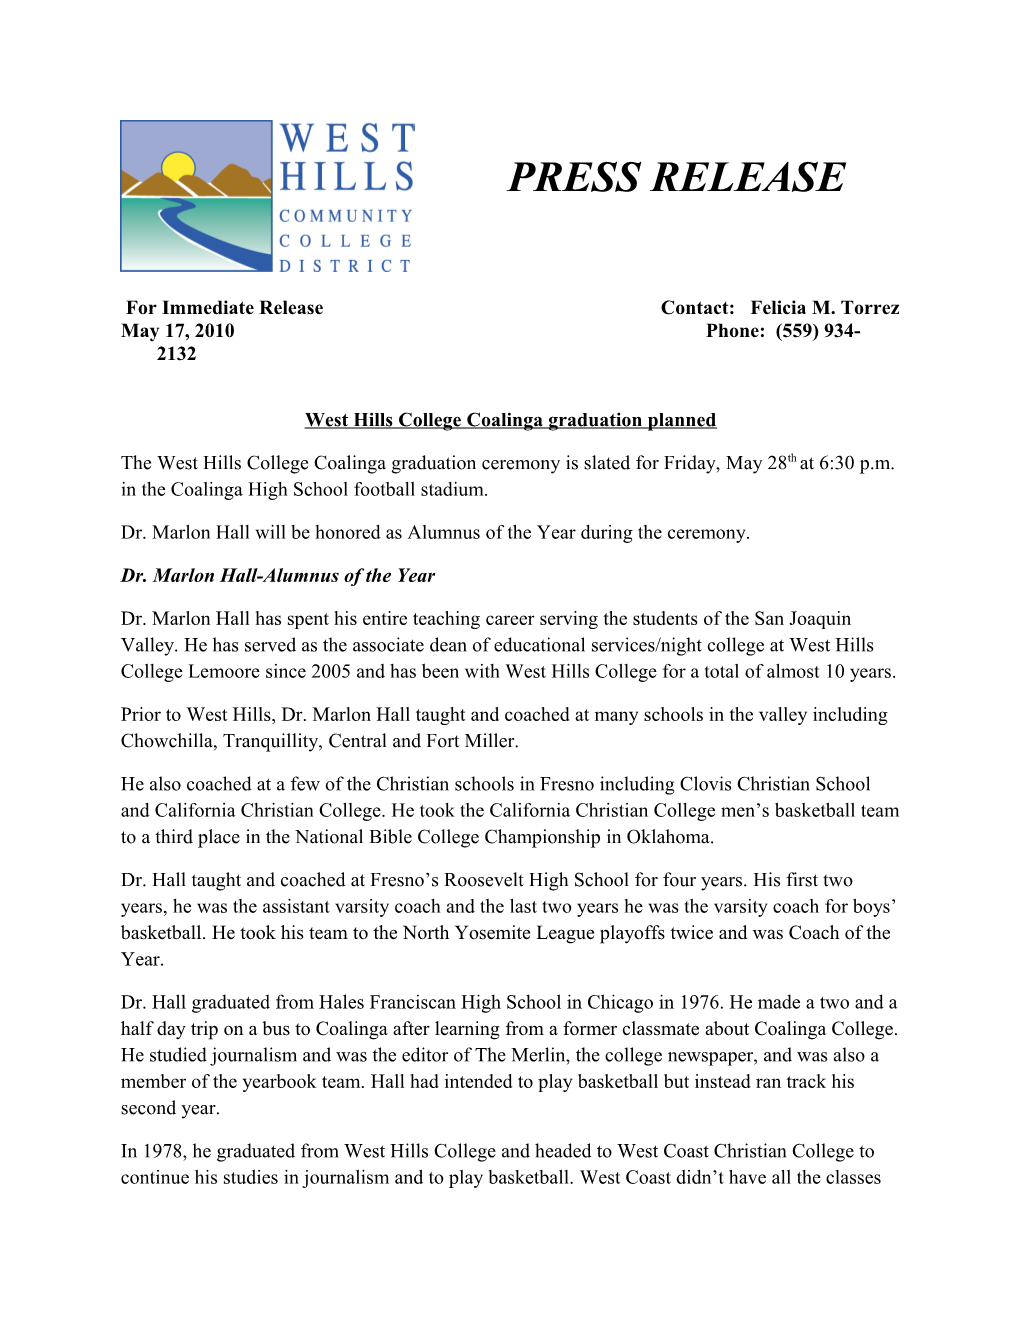 West Hills College Coaligna Graduation Planned